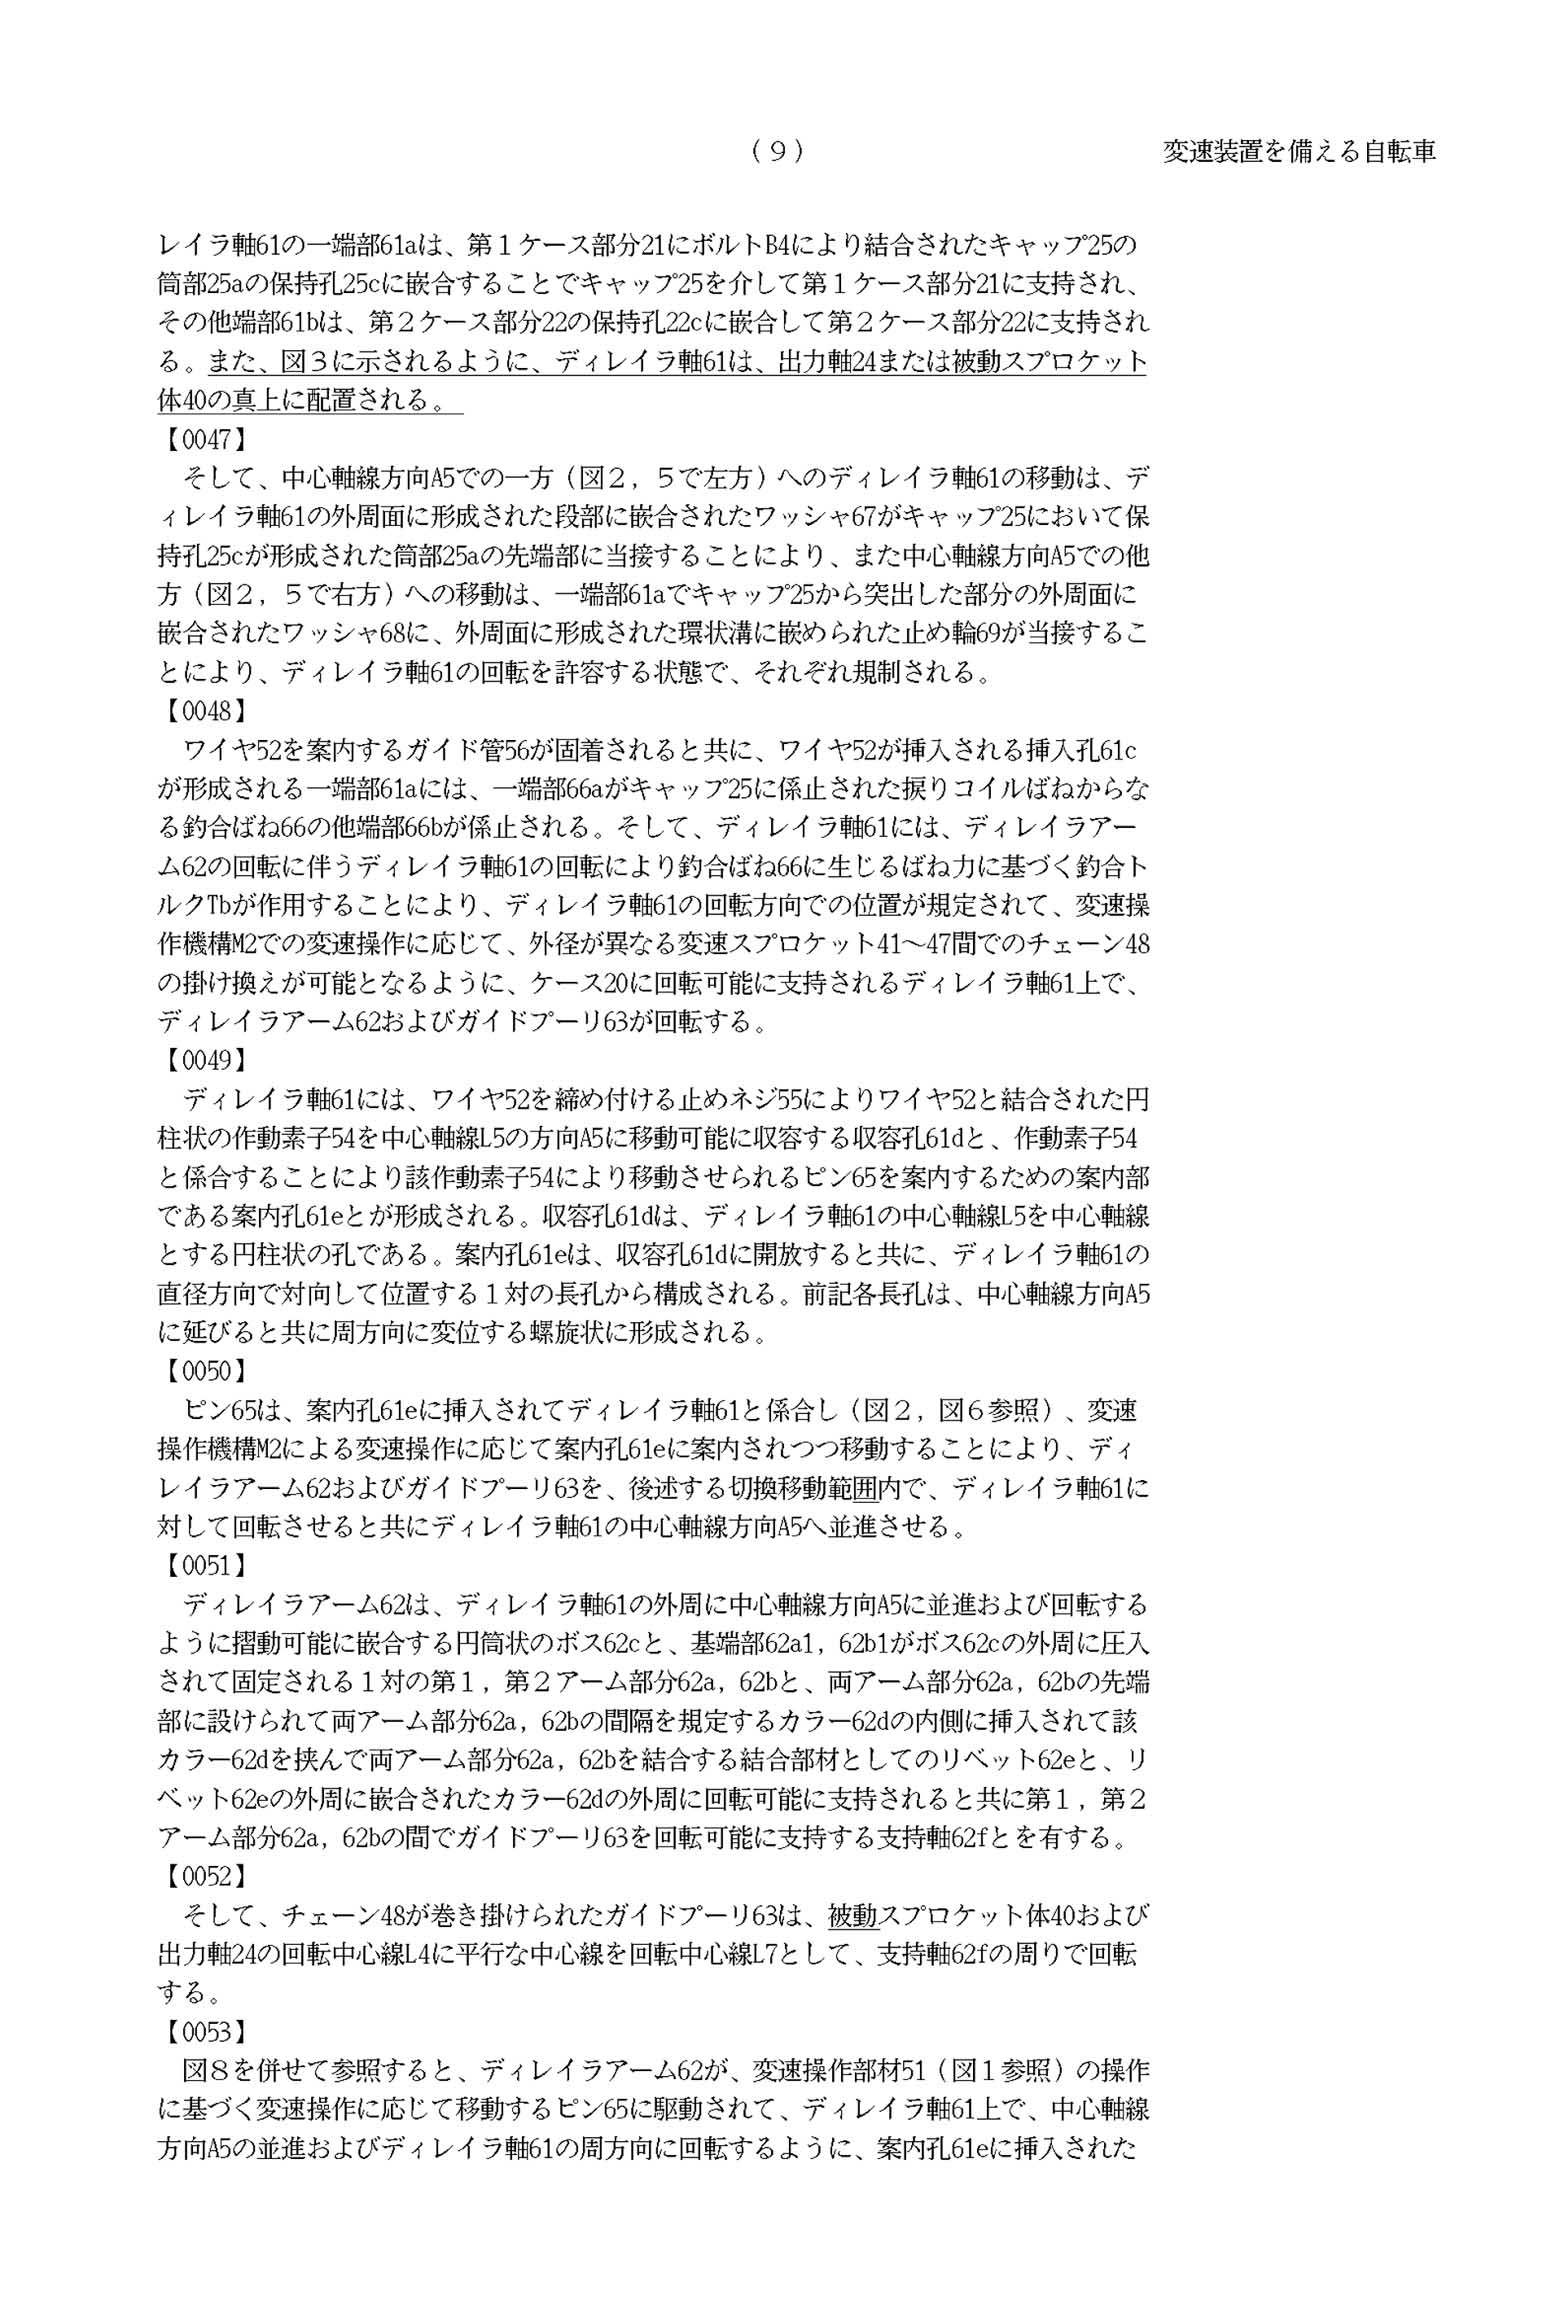 Japanese Patent 4260068 - Honda page 09 main image